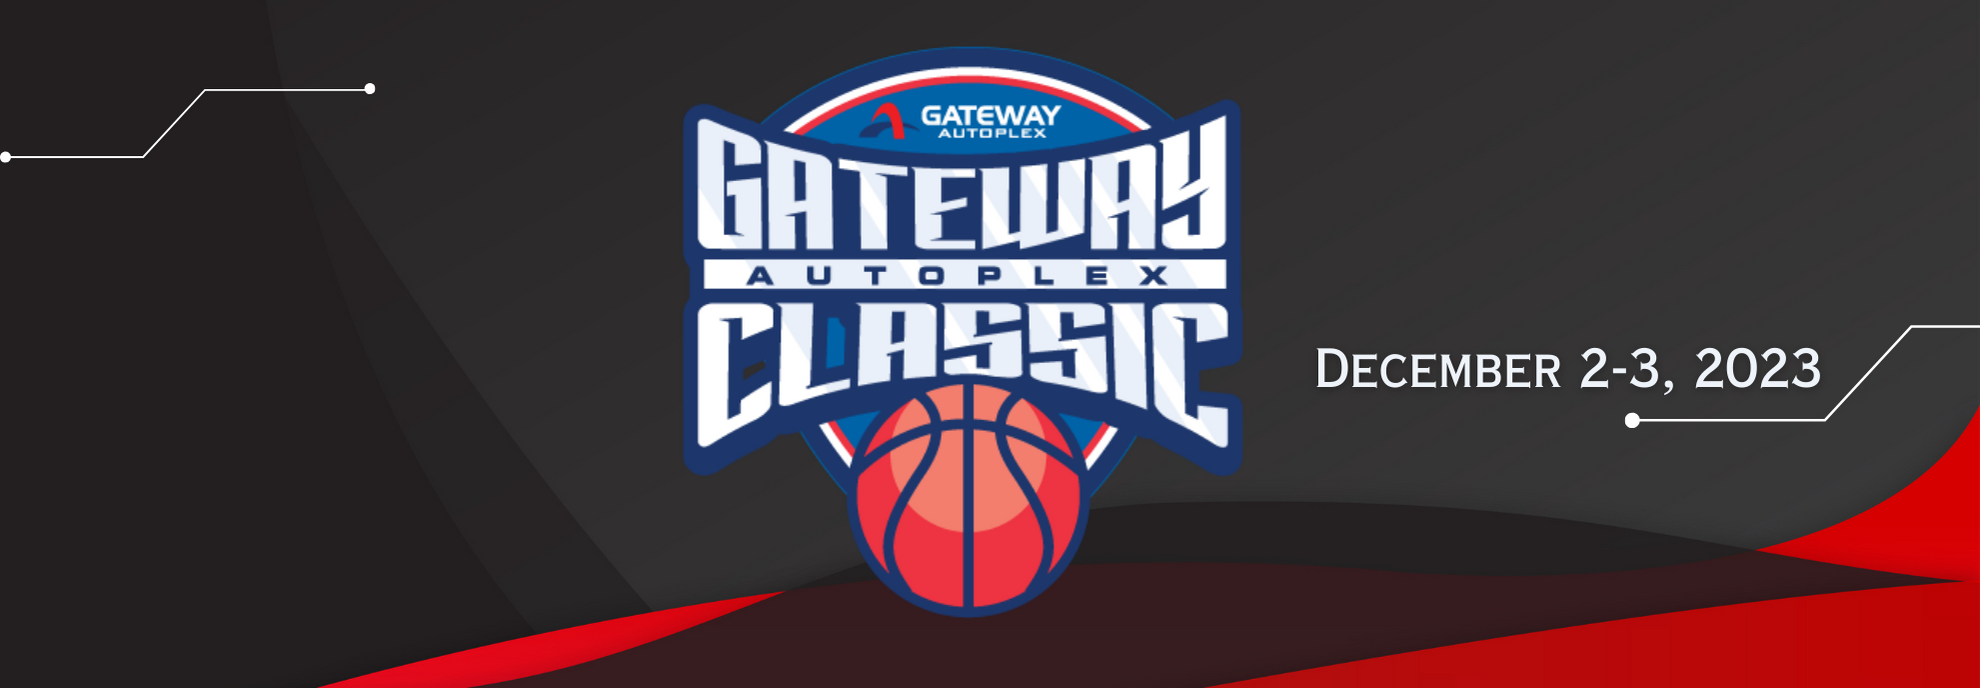 Gateway Autoplex Classic Basketball Tournament 2023